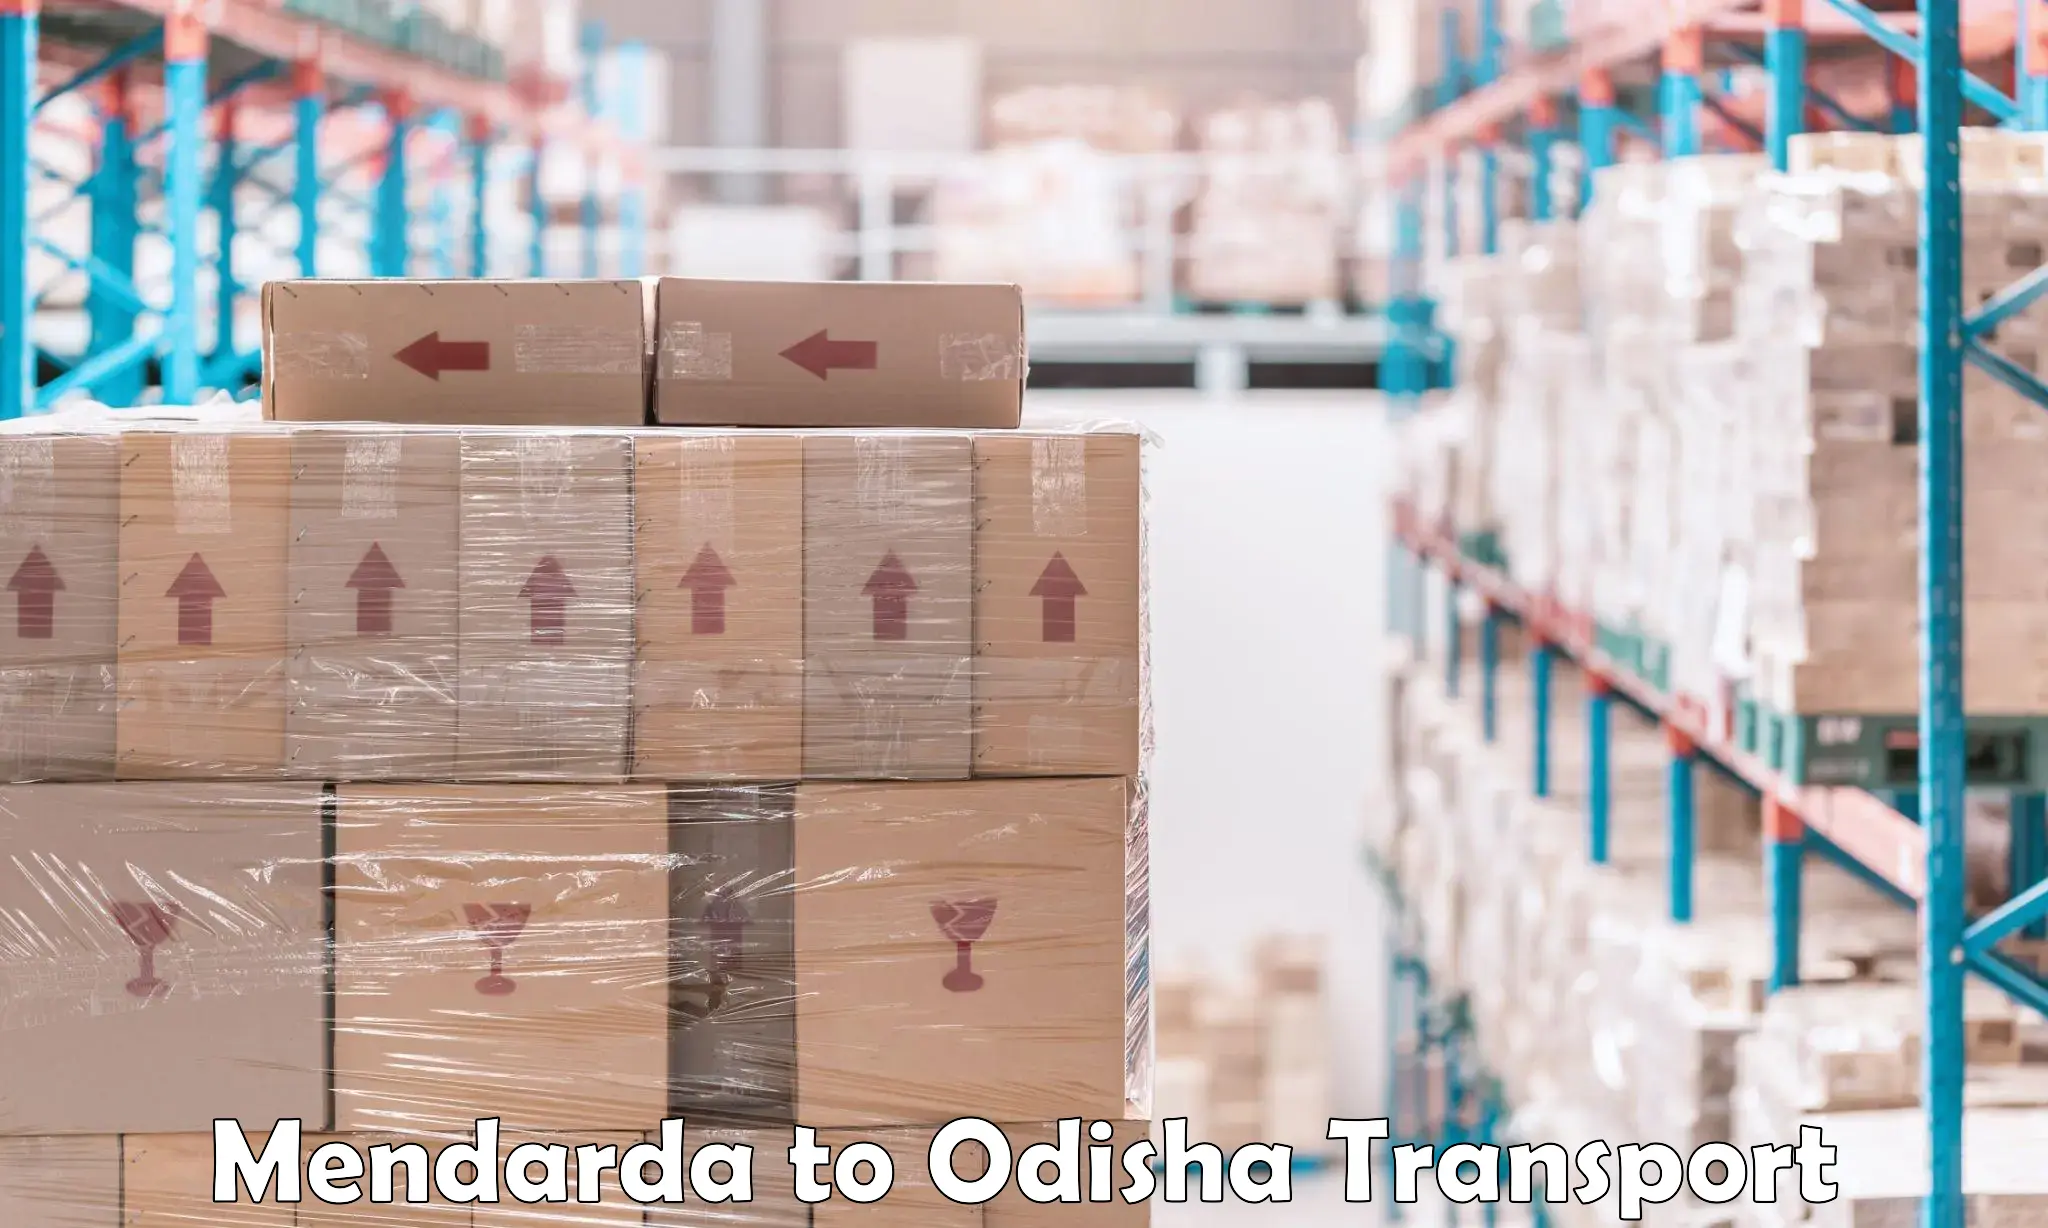 Transport in sharing Mendarda to Tikiri